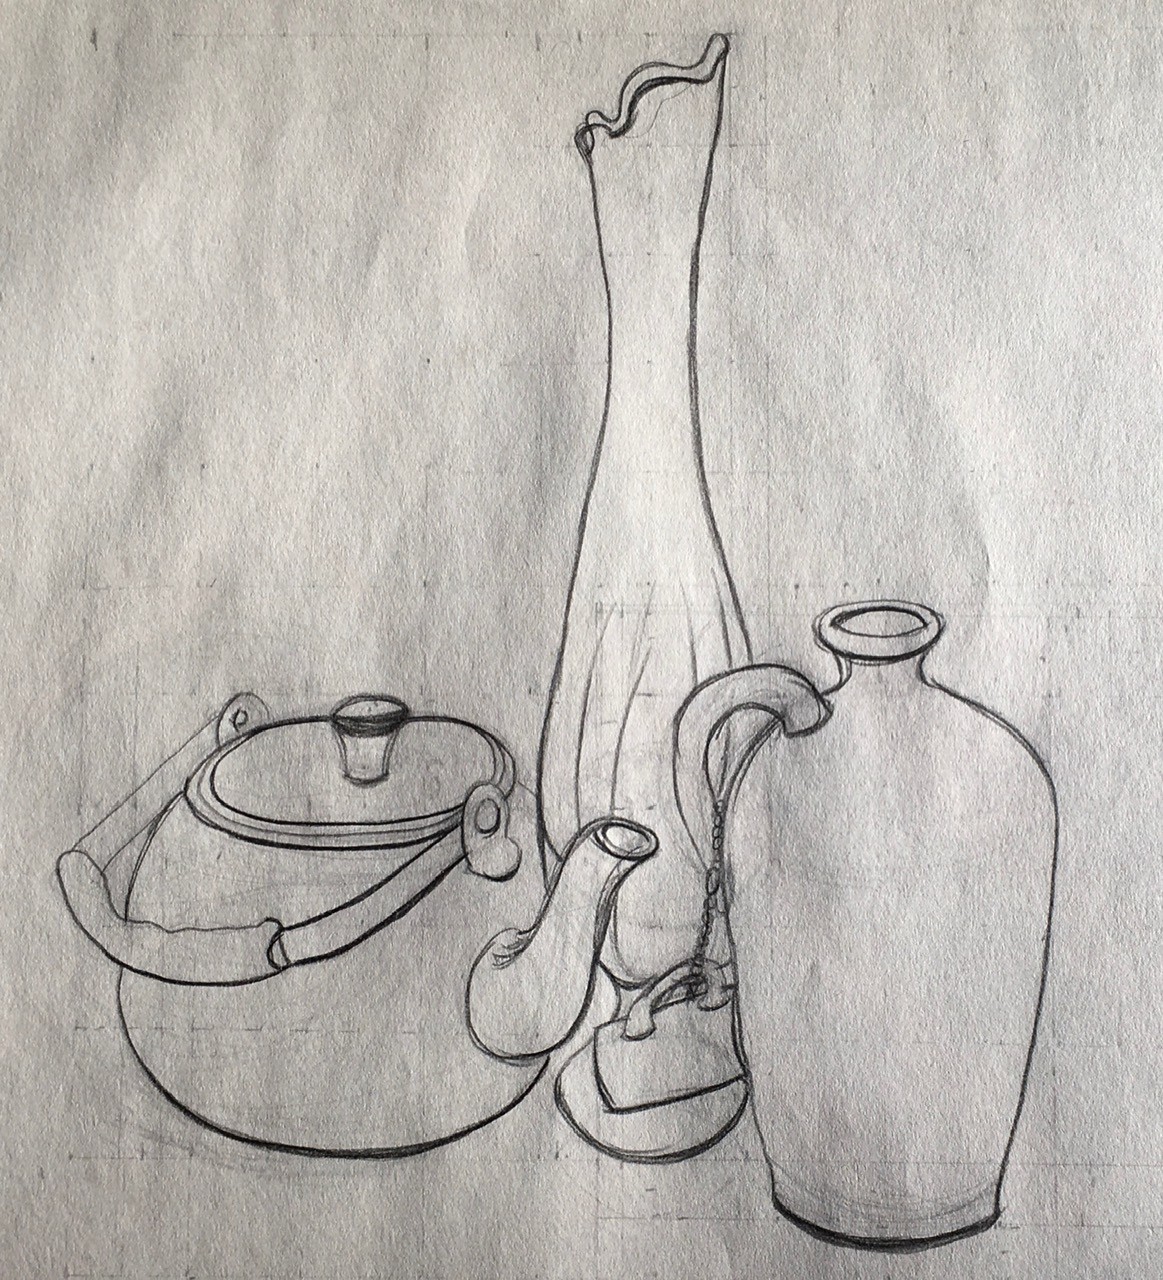 Teapot Vase Jug, 2018
Pencil on Paper
10"W x 12"H, Walli White, artist